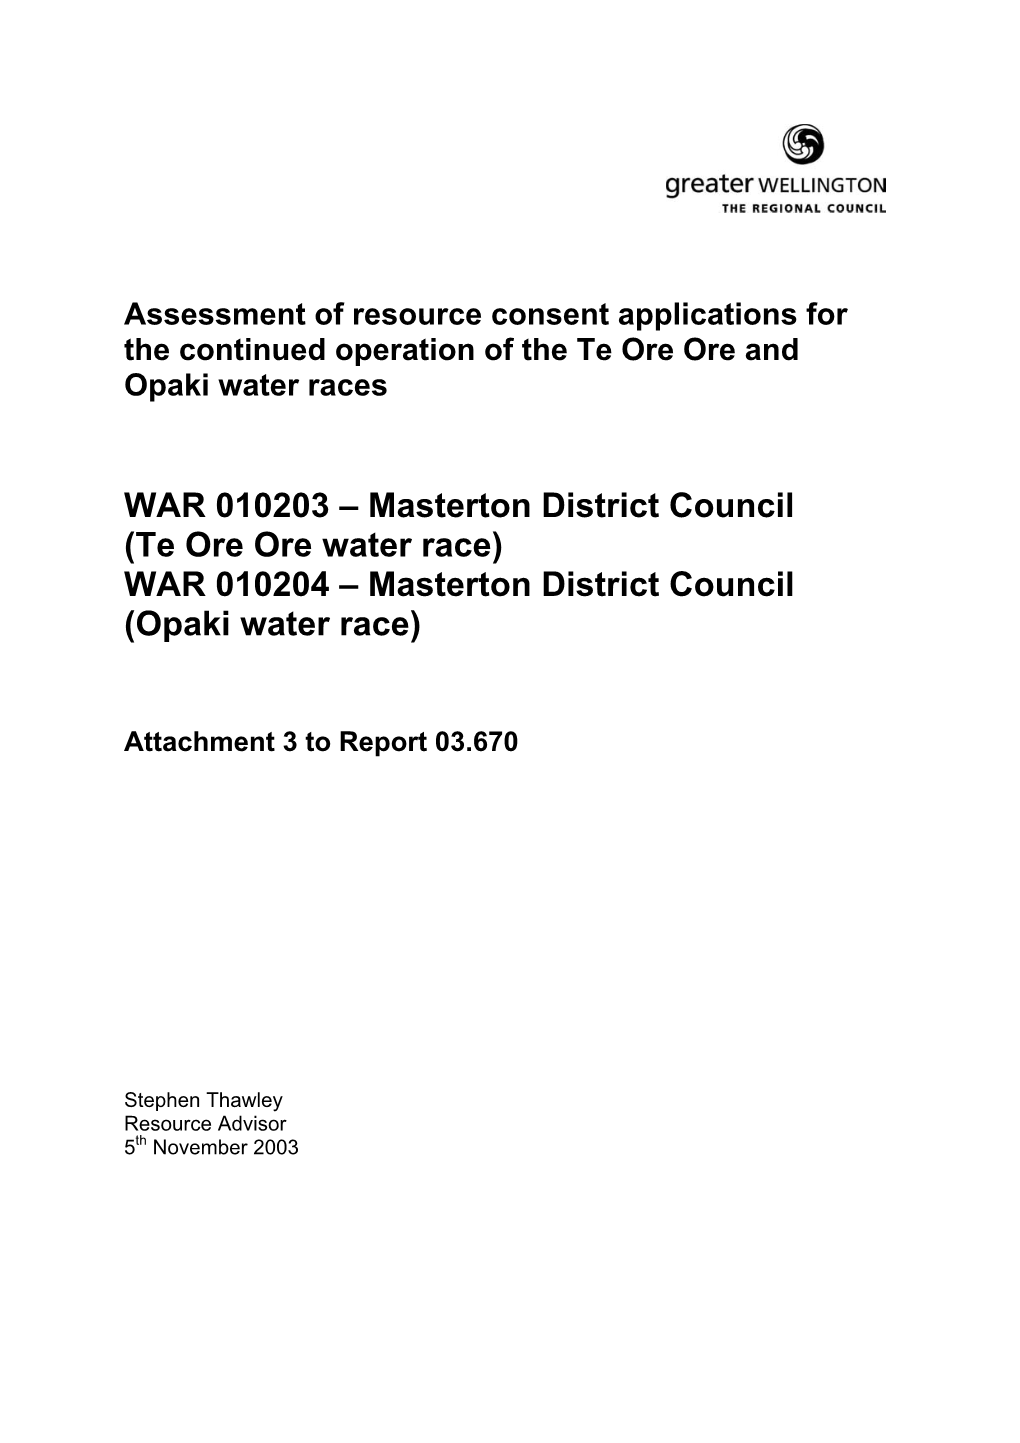 Masterton District Council (Opaki Water Race)